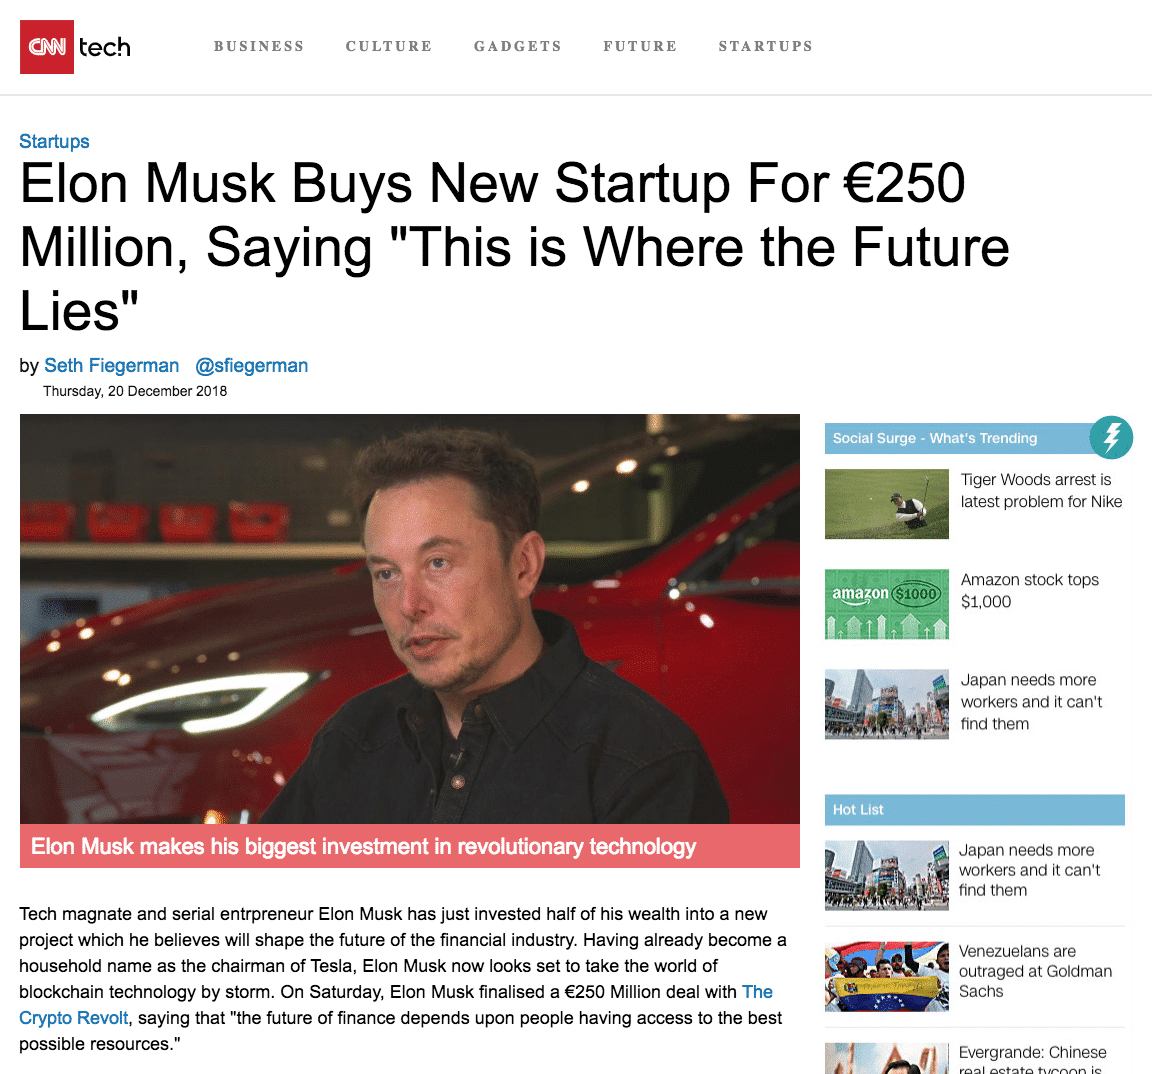 False news article about Elon Musk.